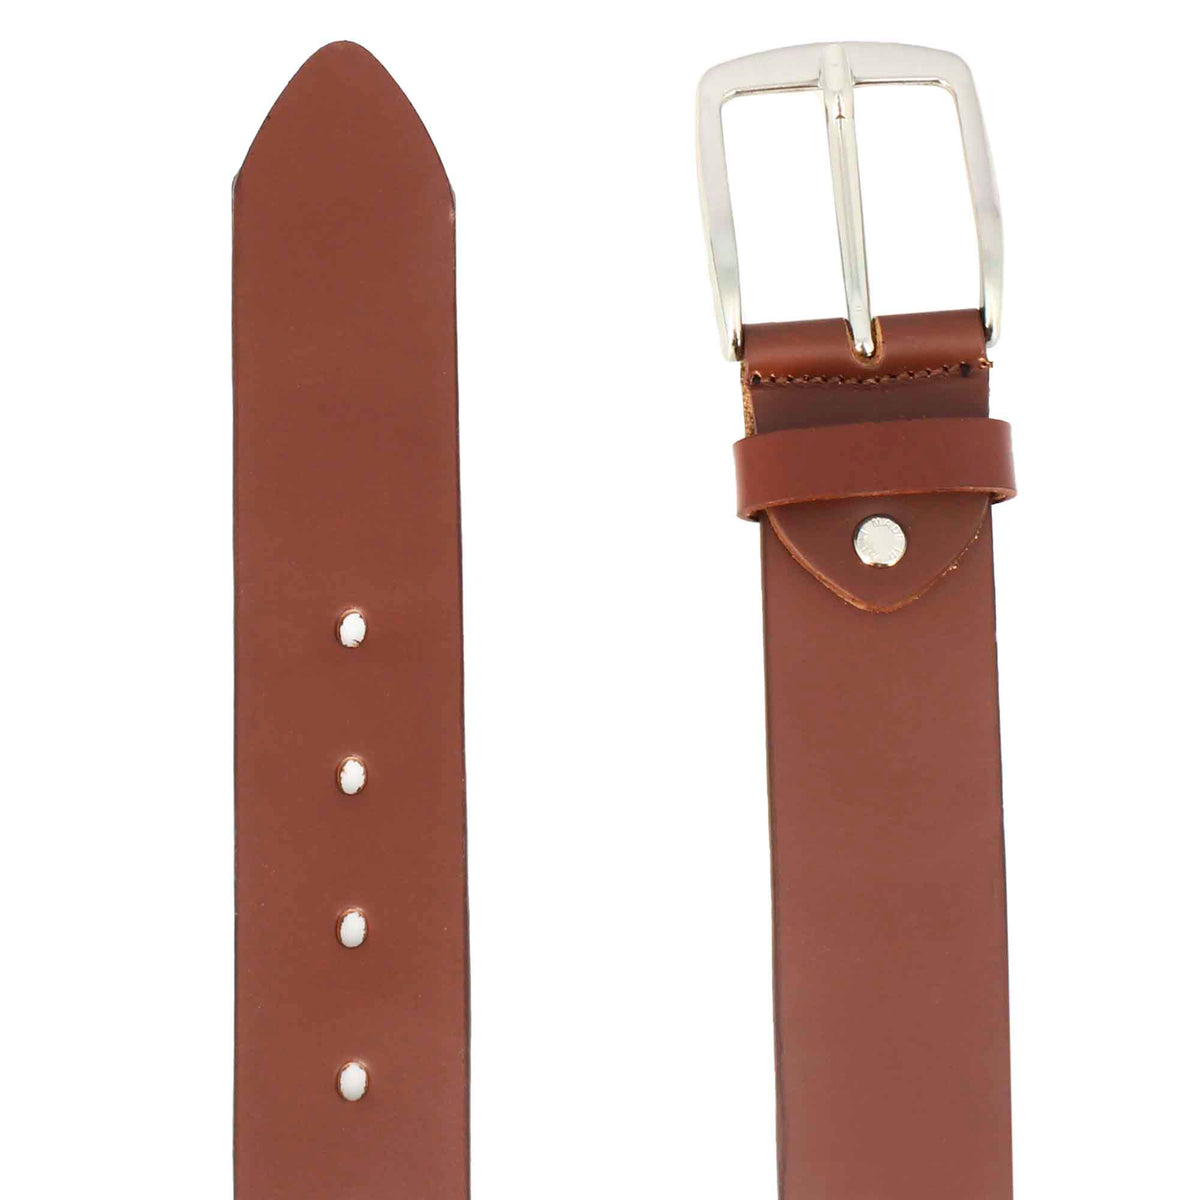 Brick brown men's leather belt